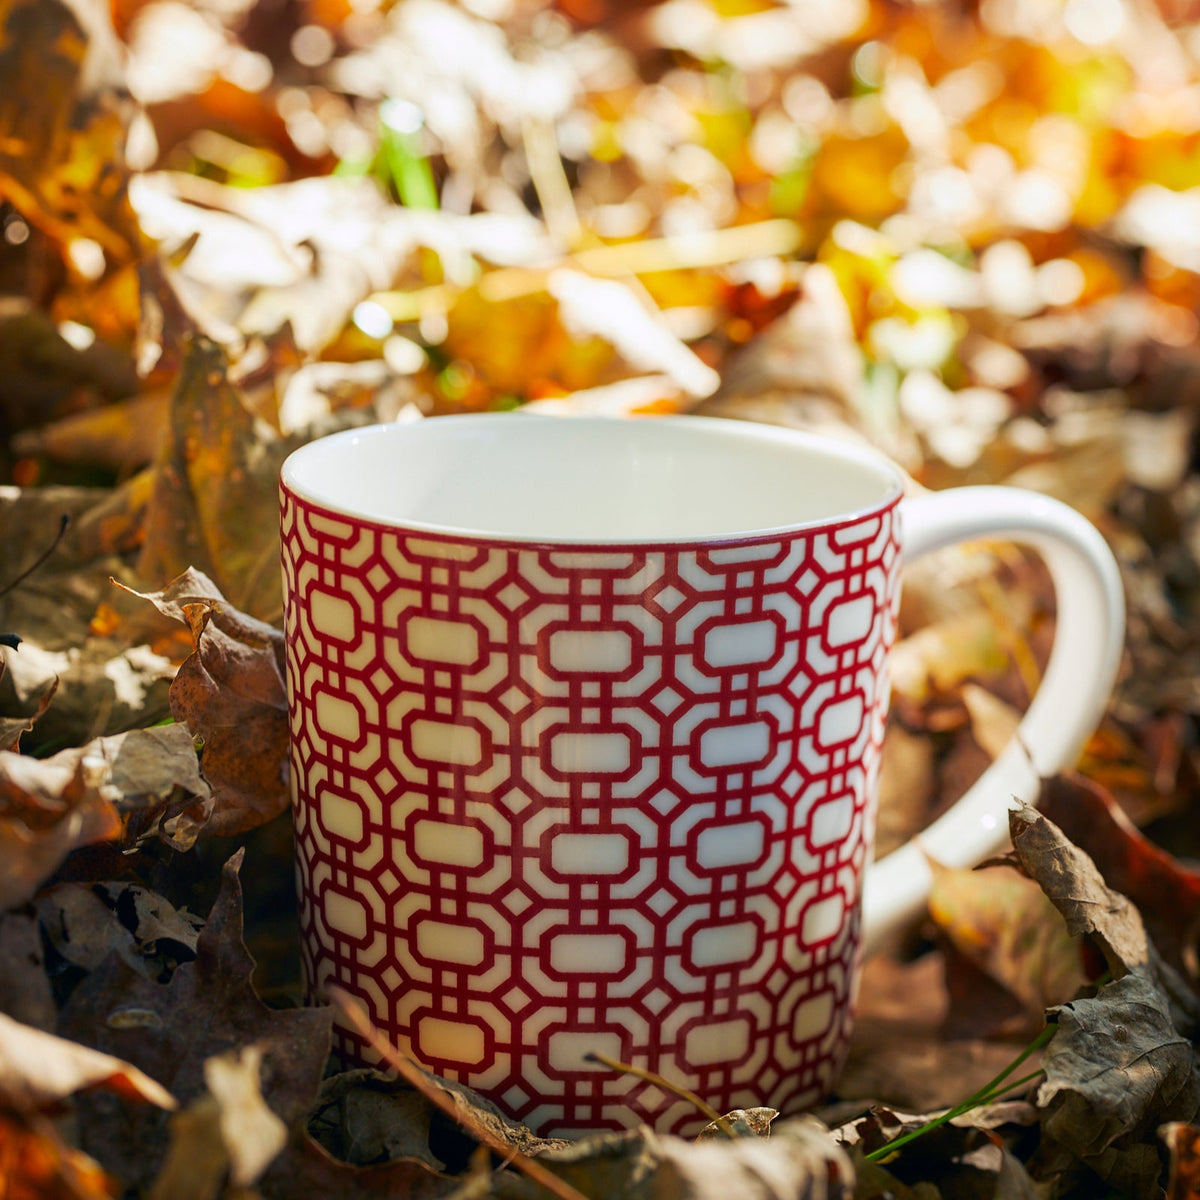 A Newport Garden Gate Crimson Mug sitting on a pile of leaves. (Brand: Caskata Artisanal Home)